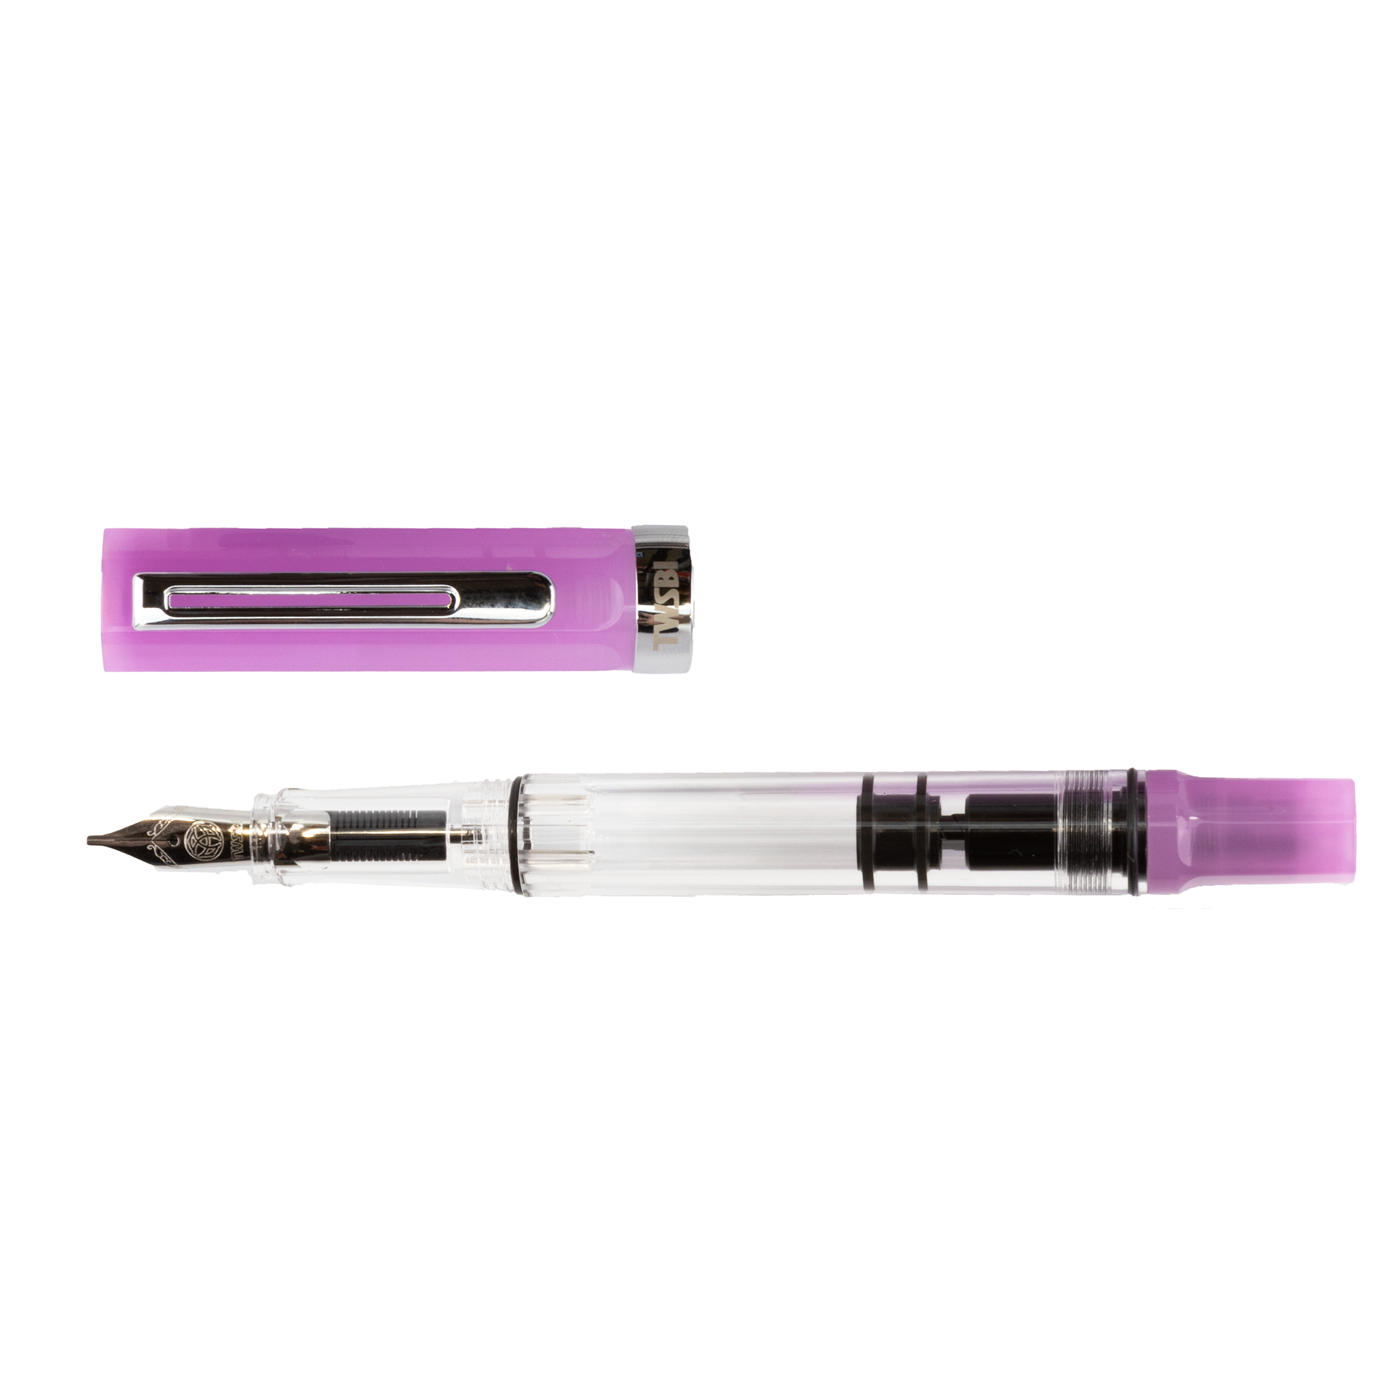 NEW Glow in the Dark TWSBI Eco Fountain Pen in Glow Purple 